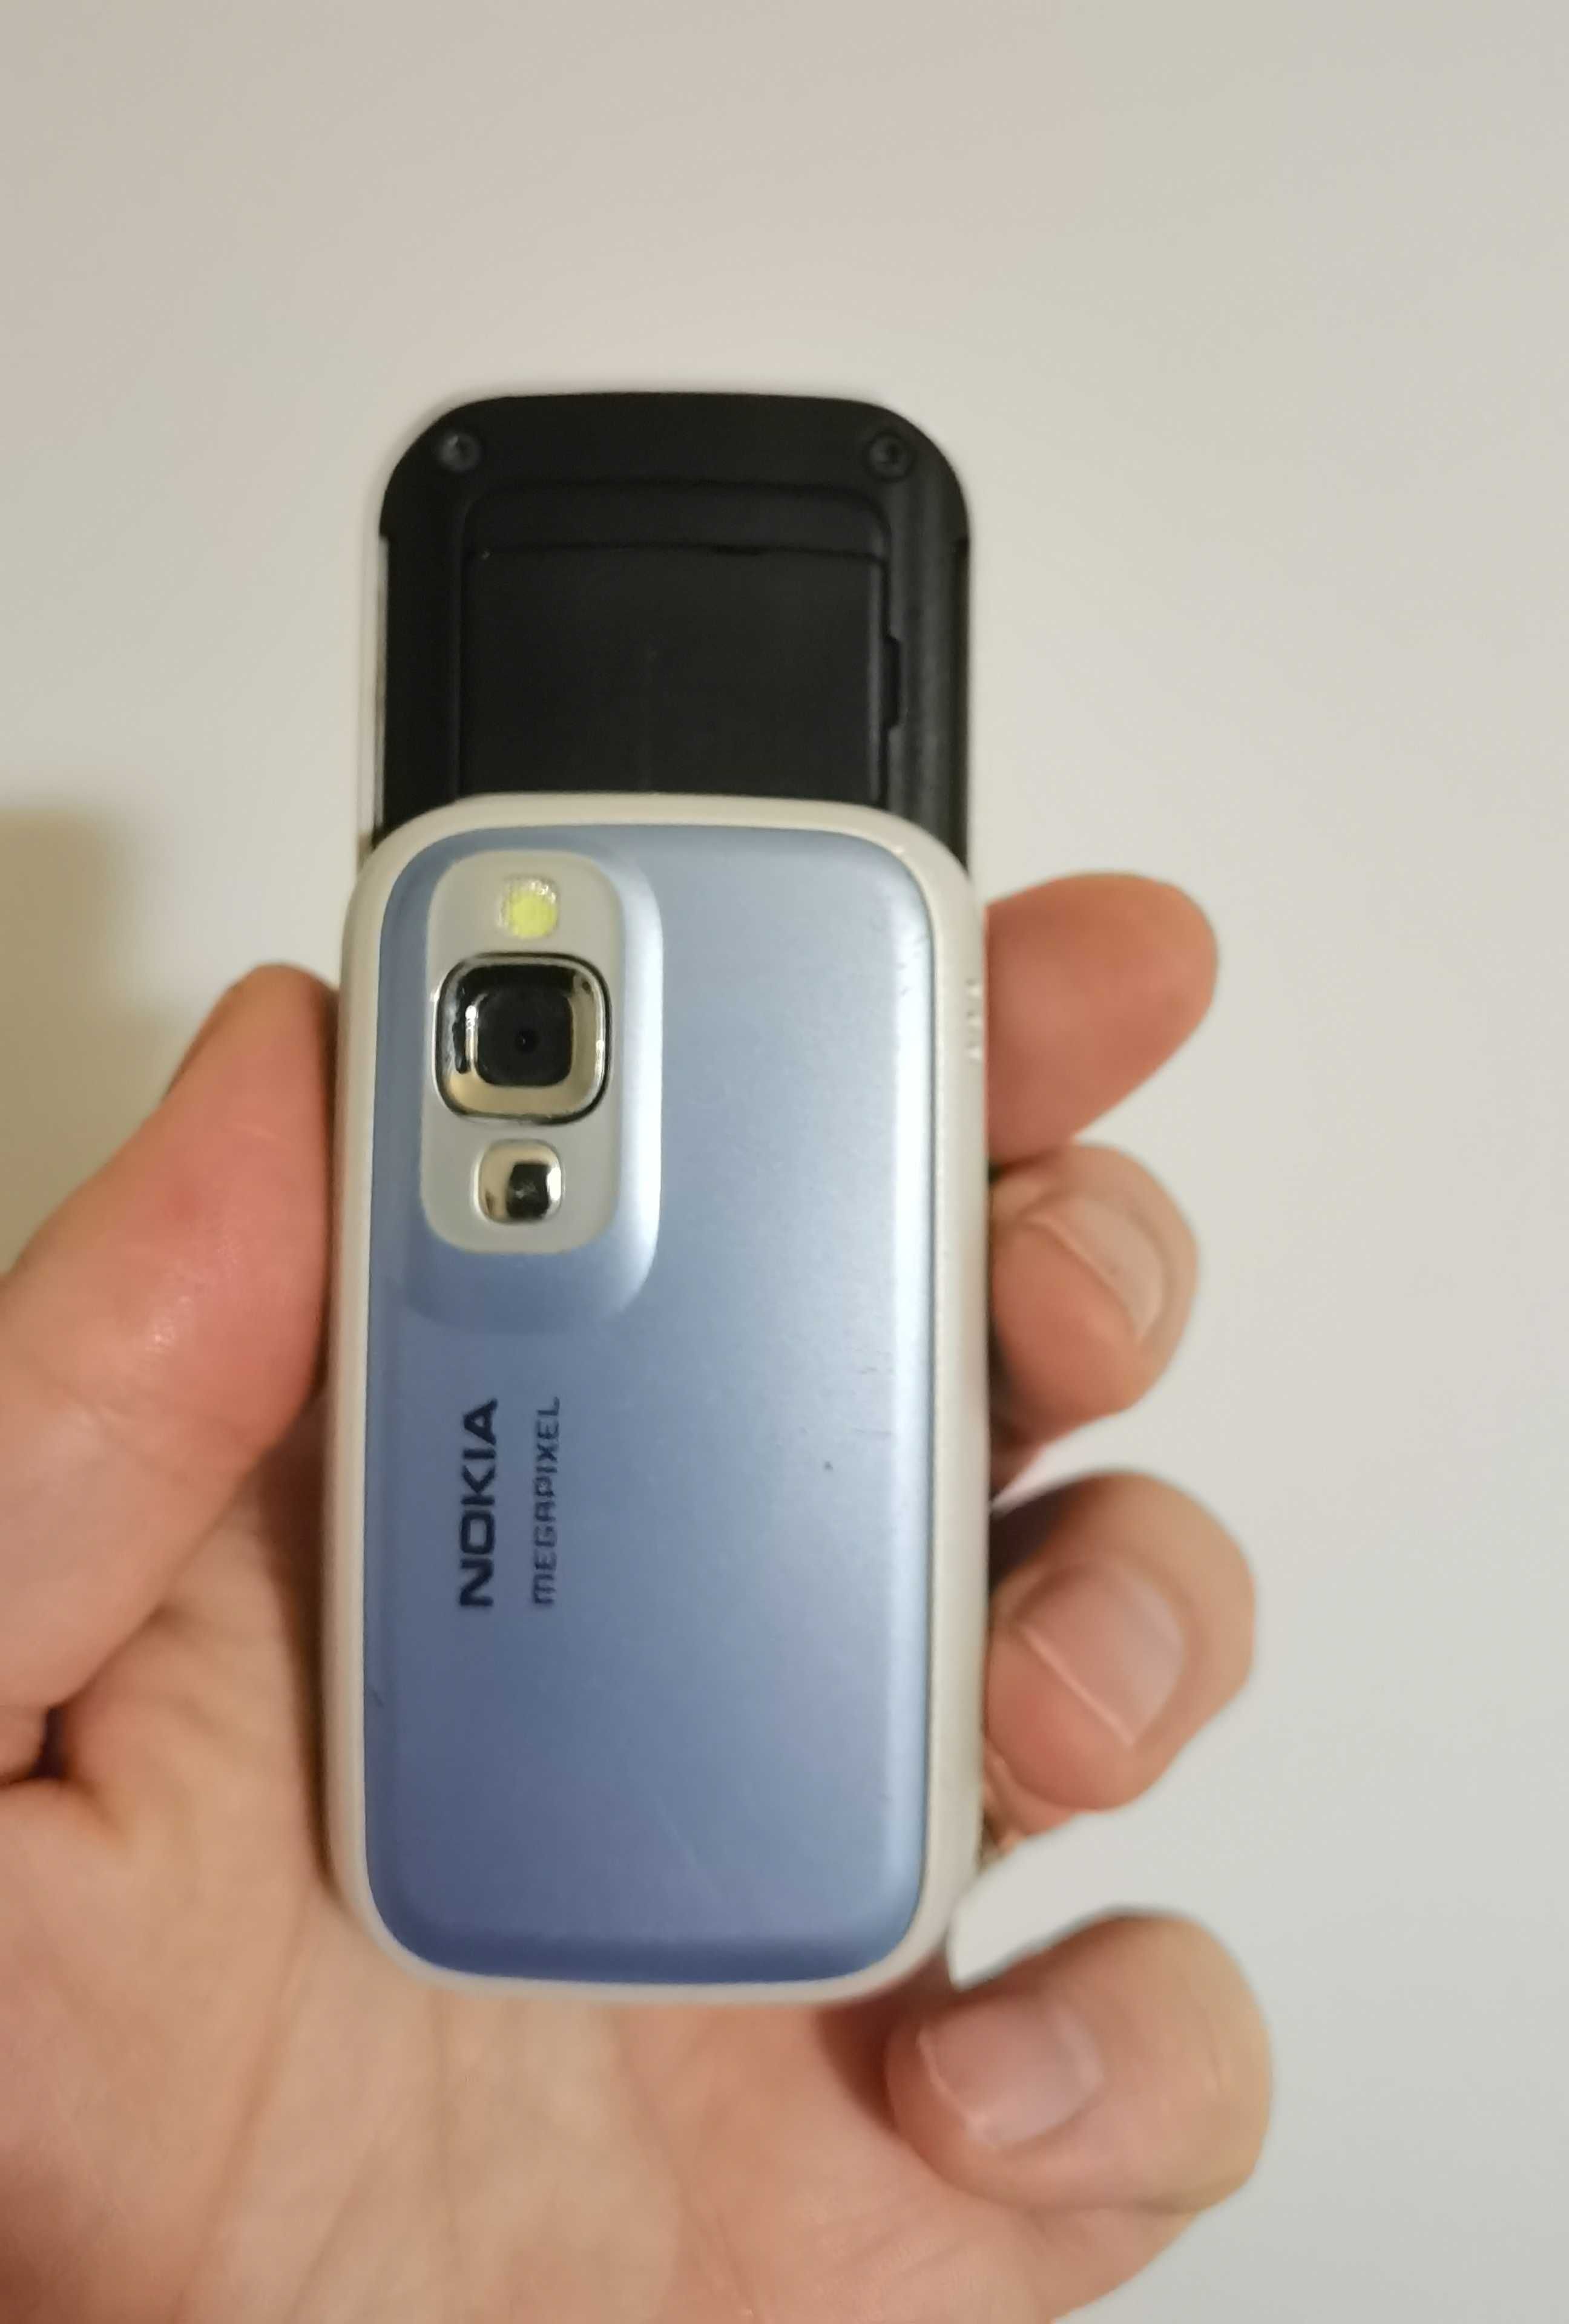 Nokia 6111 testat pe Digi Mobil